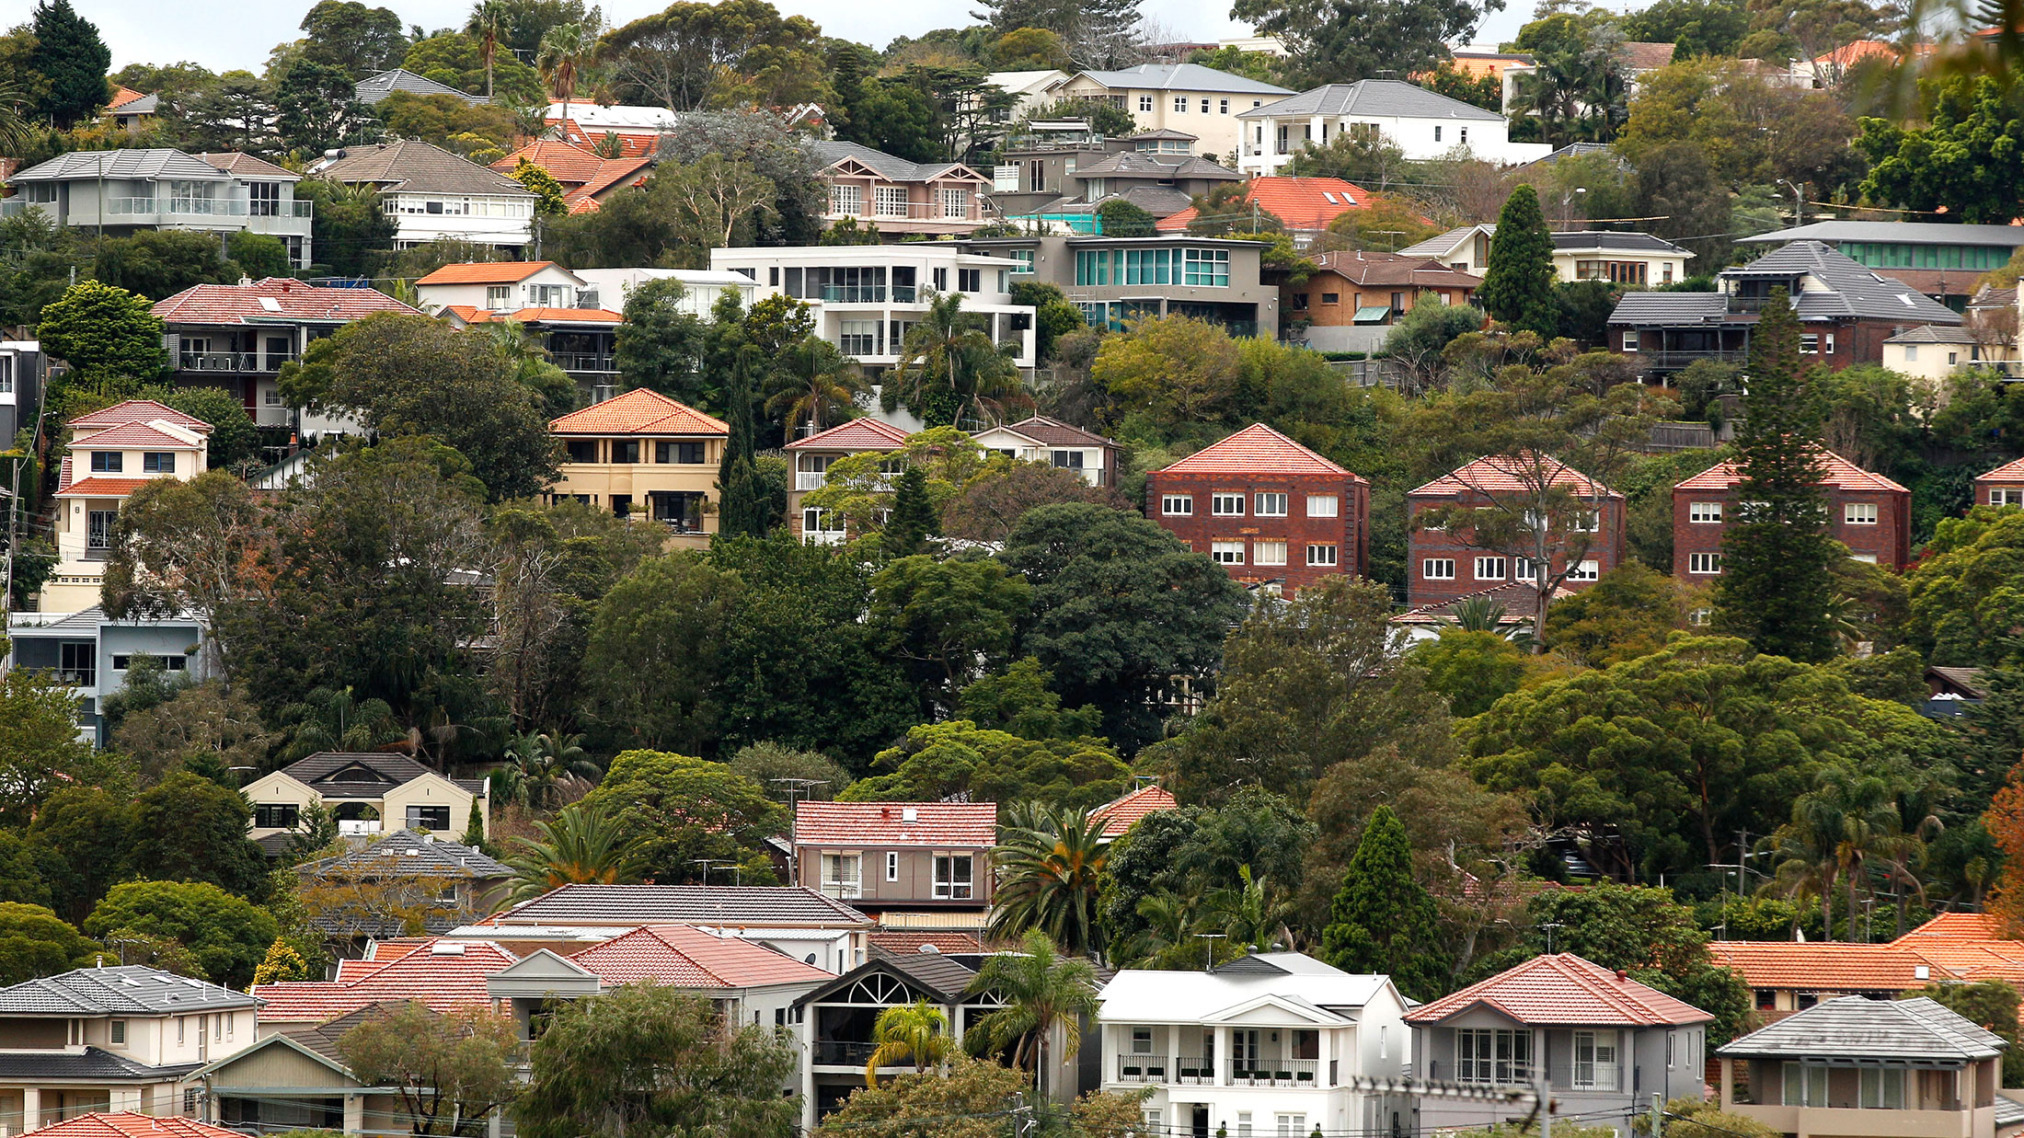 Houses in a suburb of Sydney, Australia.
